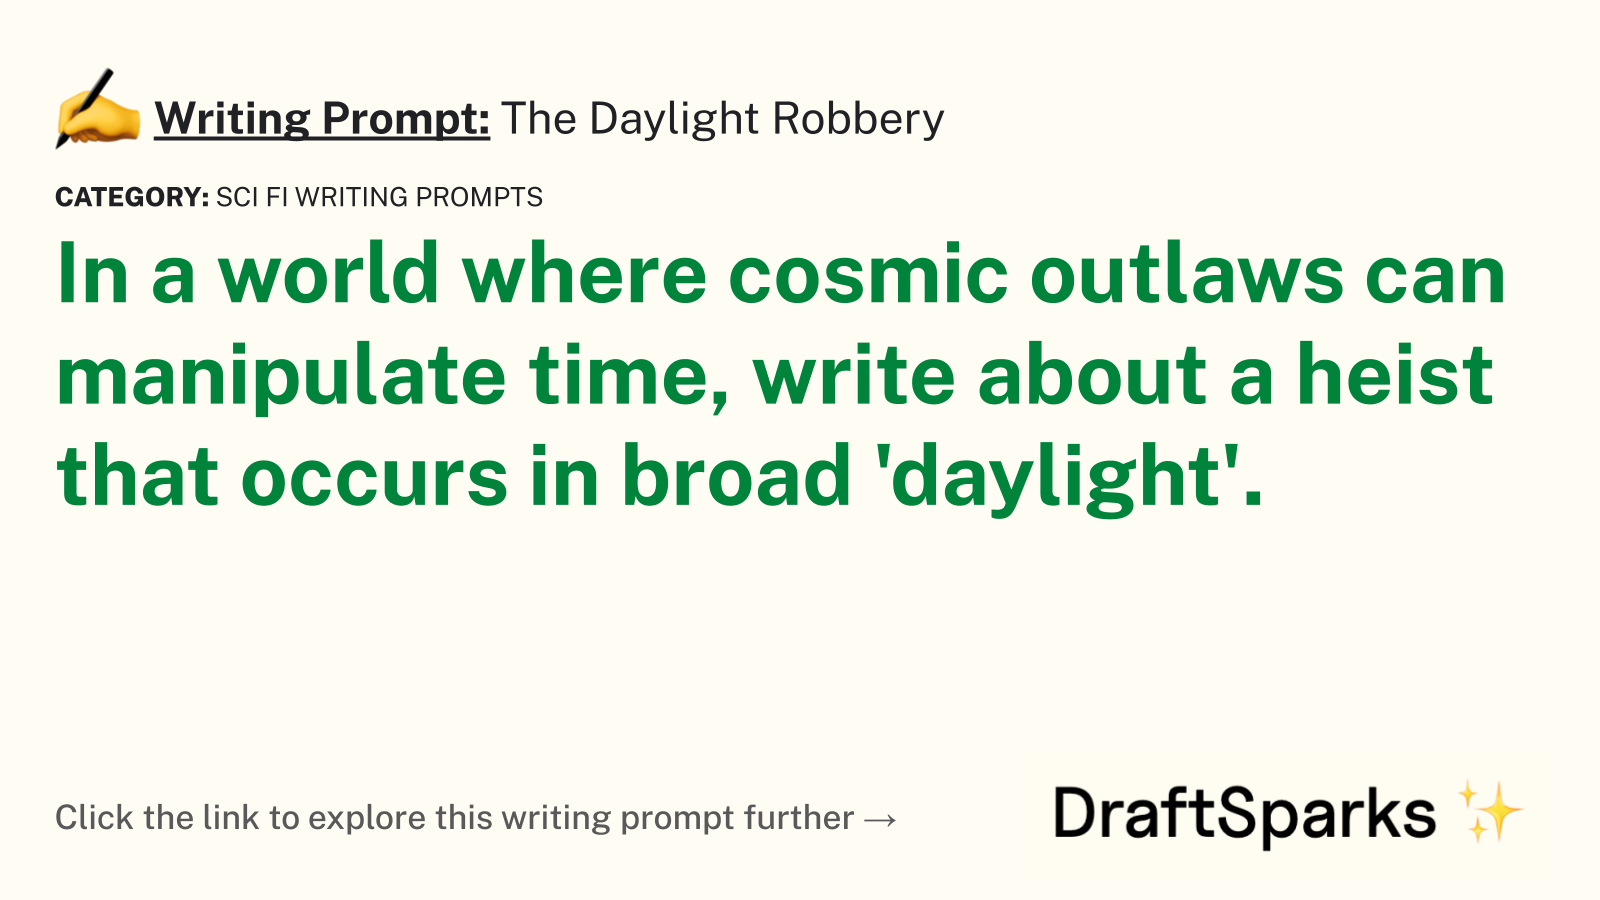 The Daylight Robbery